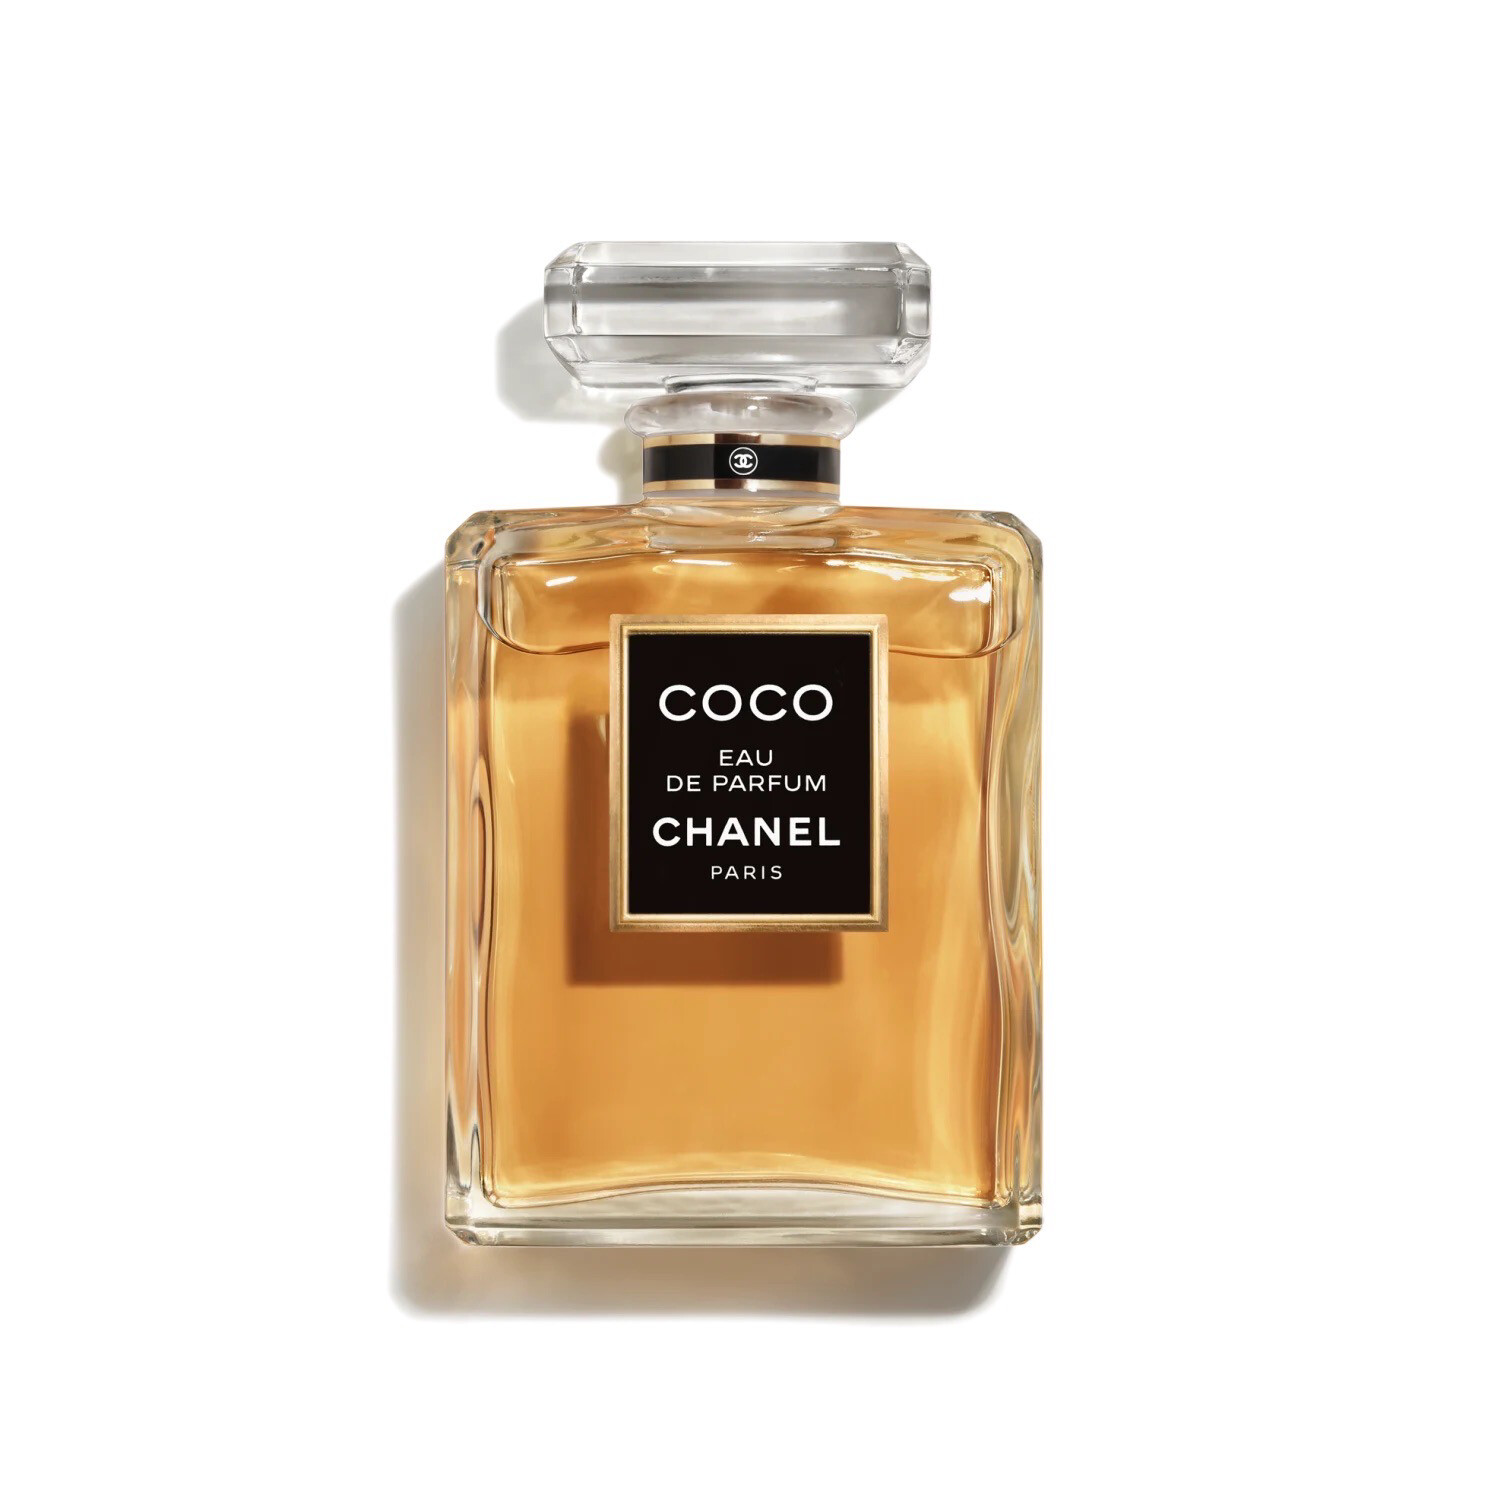 Coco chanel eau de parfum